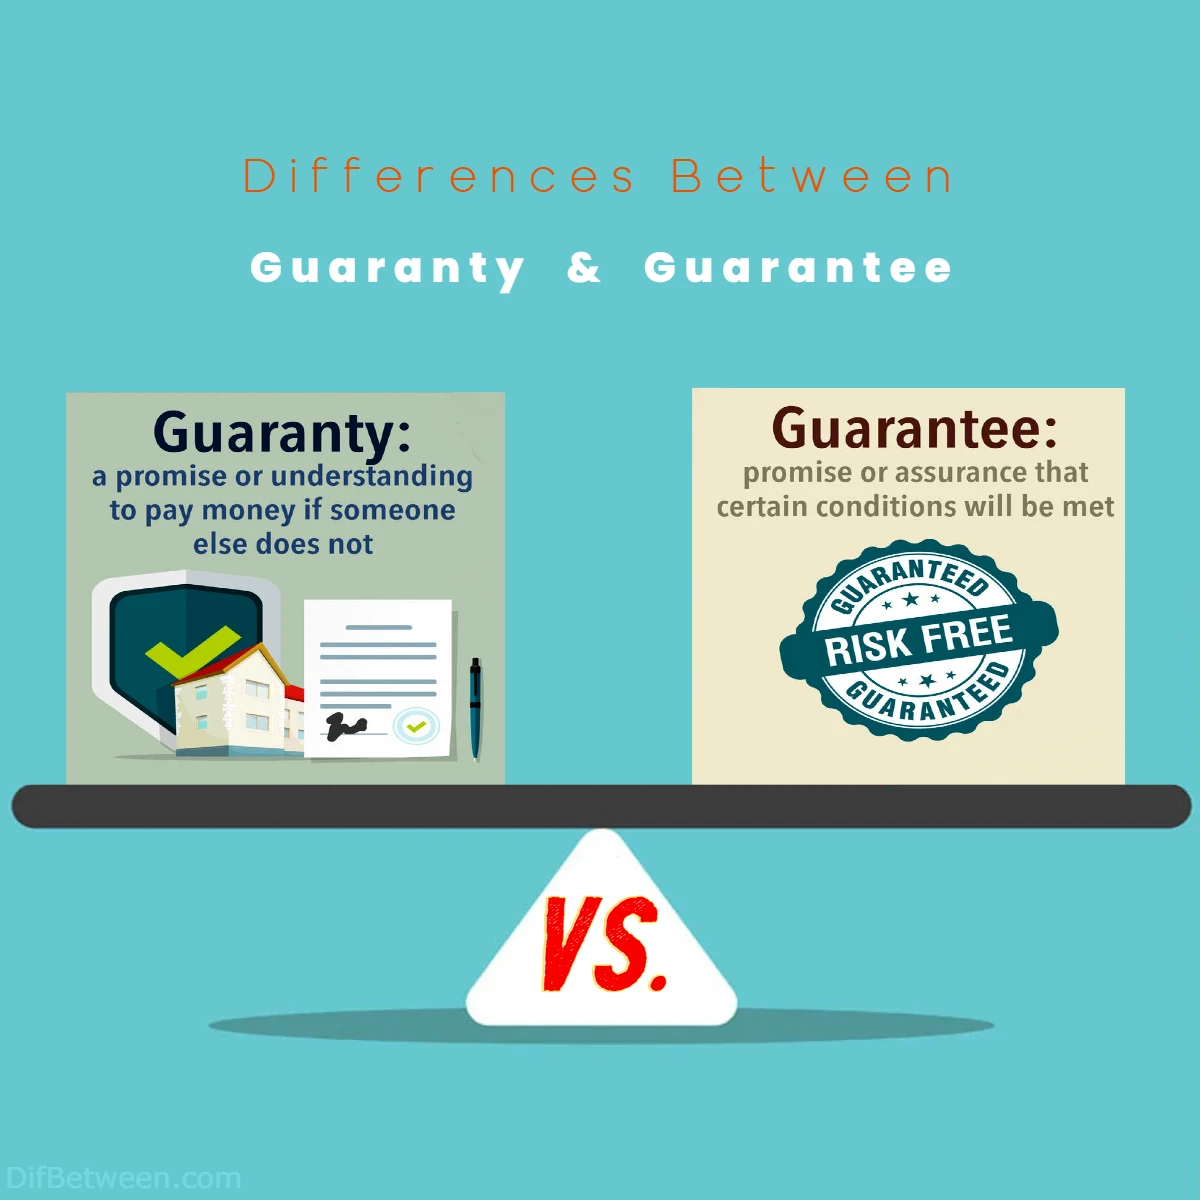 Differences Between Guaranty vs Guarantee